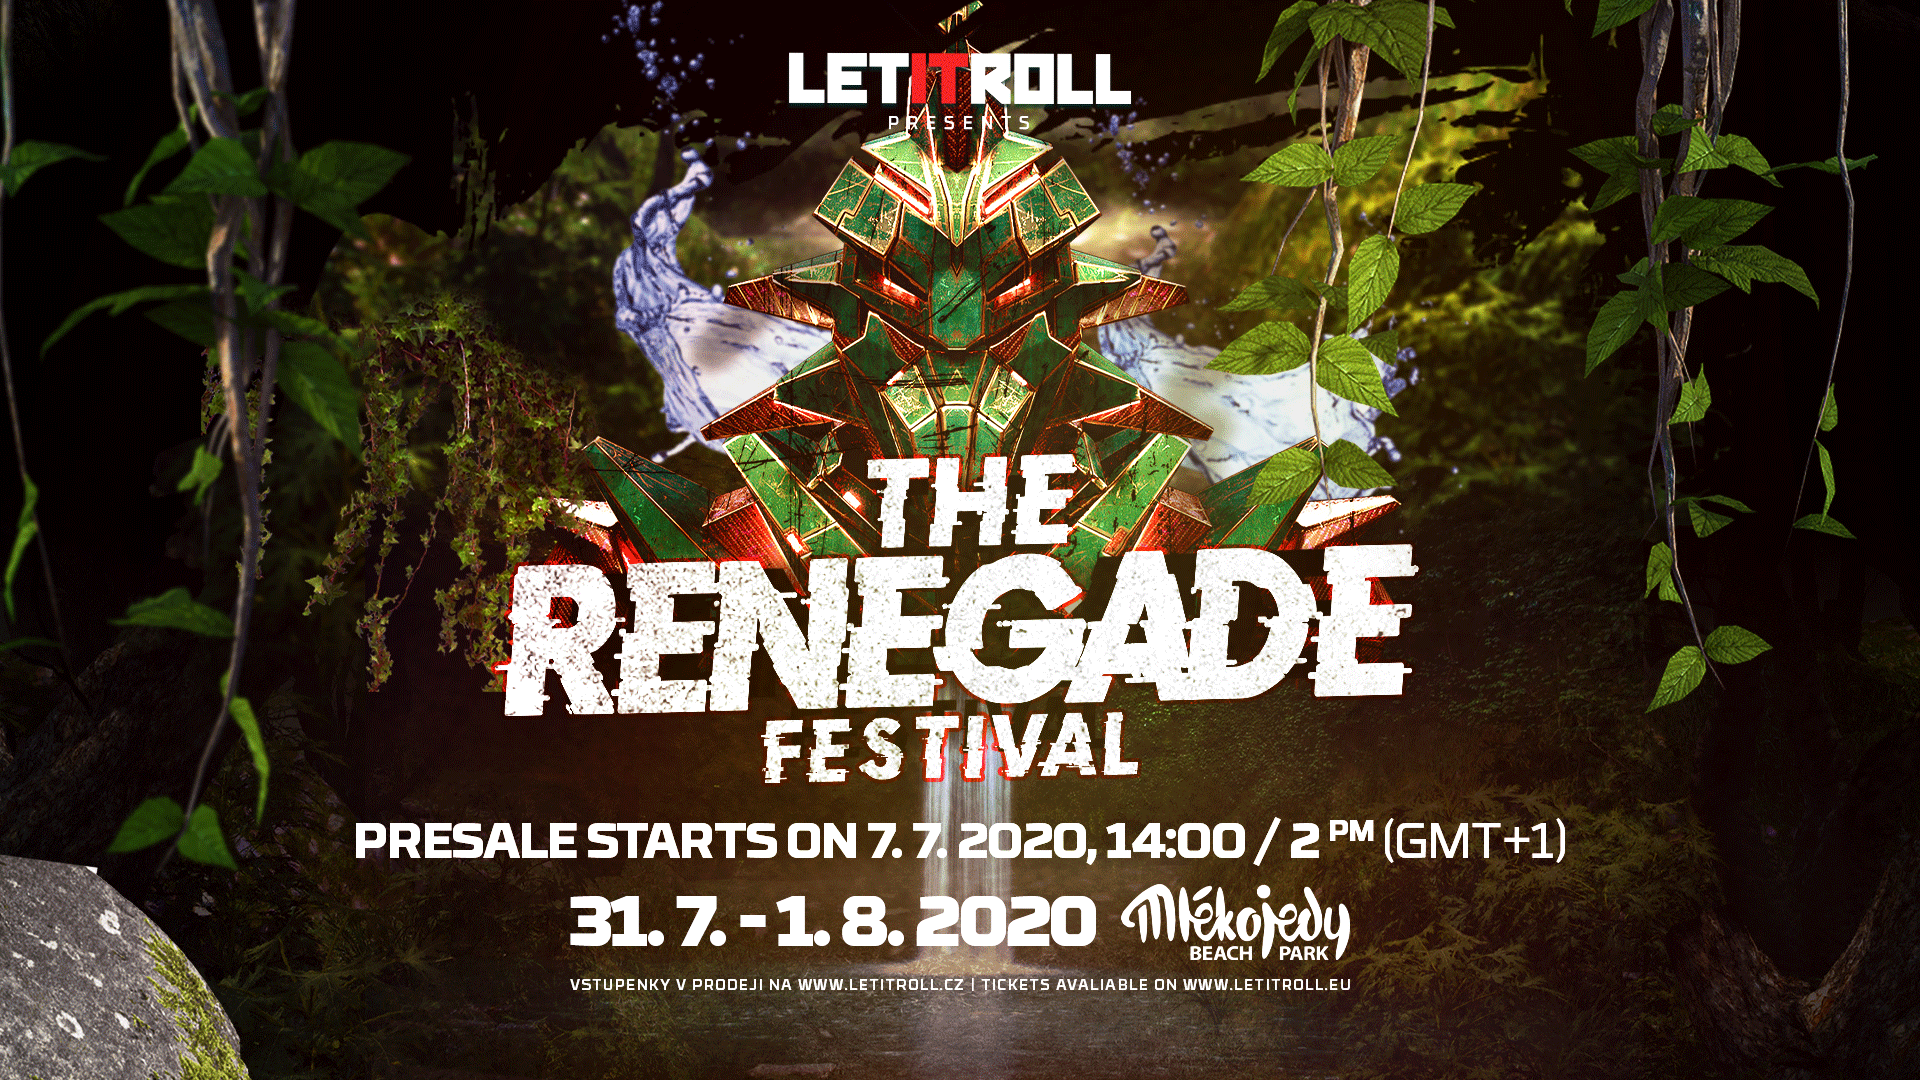 The Renegade festival